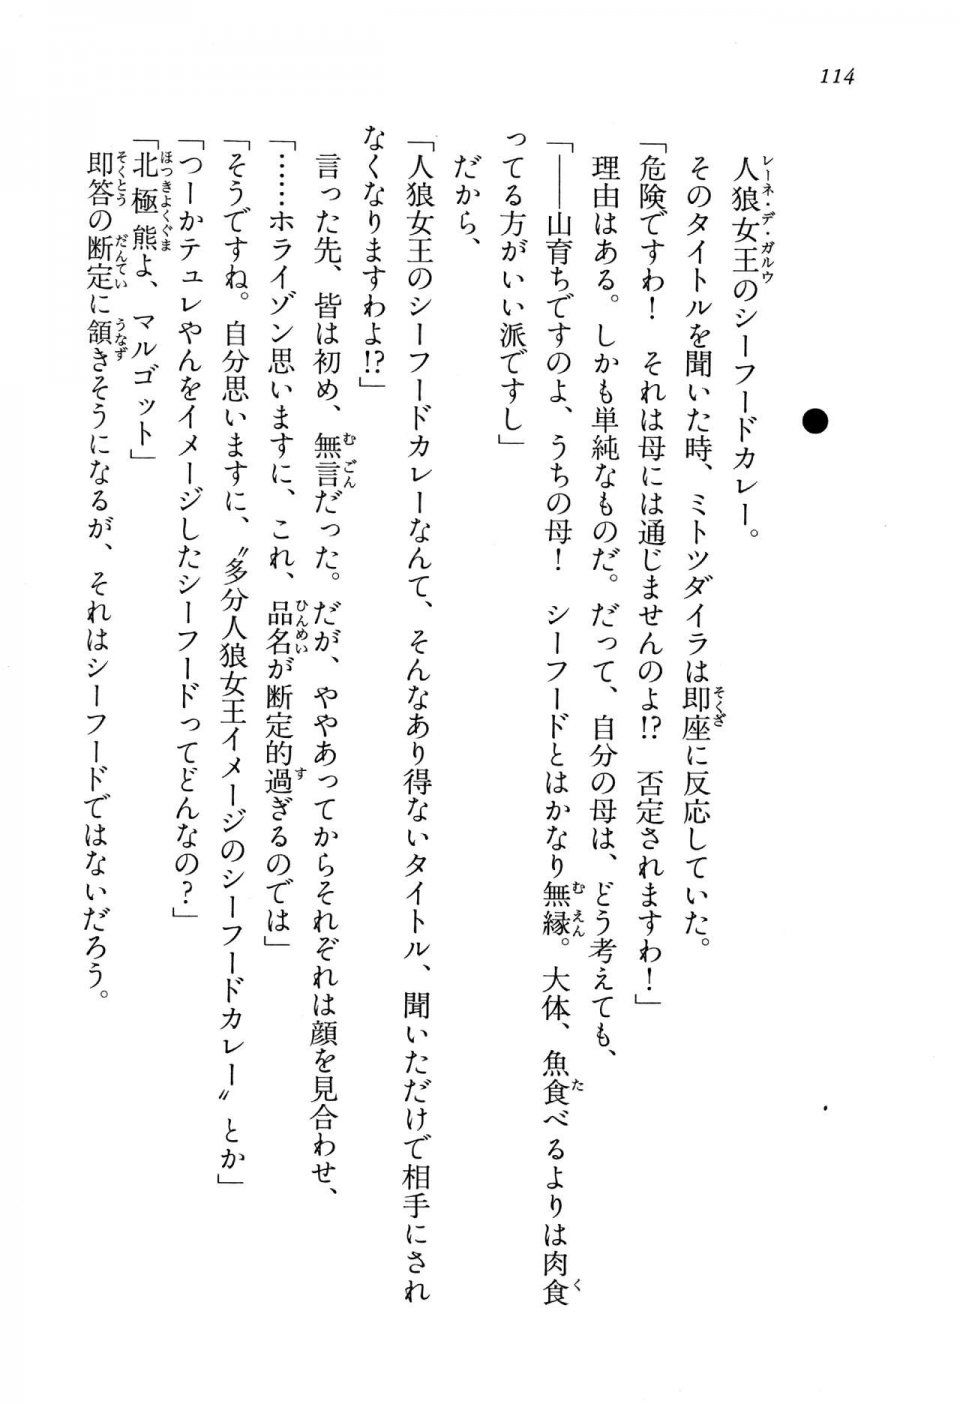 Kyoukai Senjou no Horizon LN Vol 15(6C) Part 1 - Photo #114